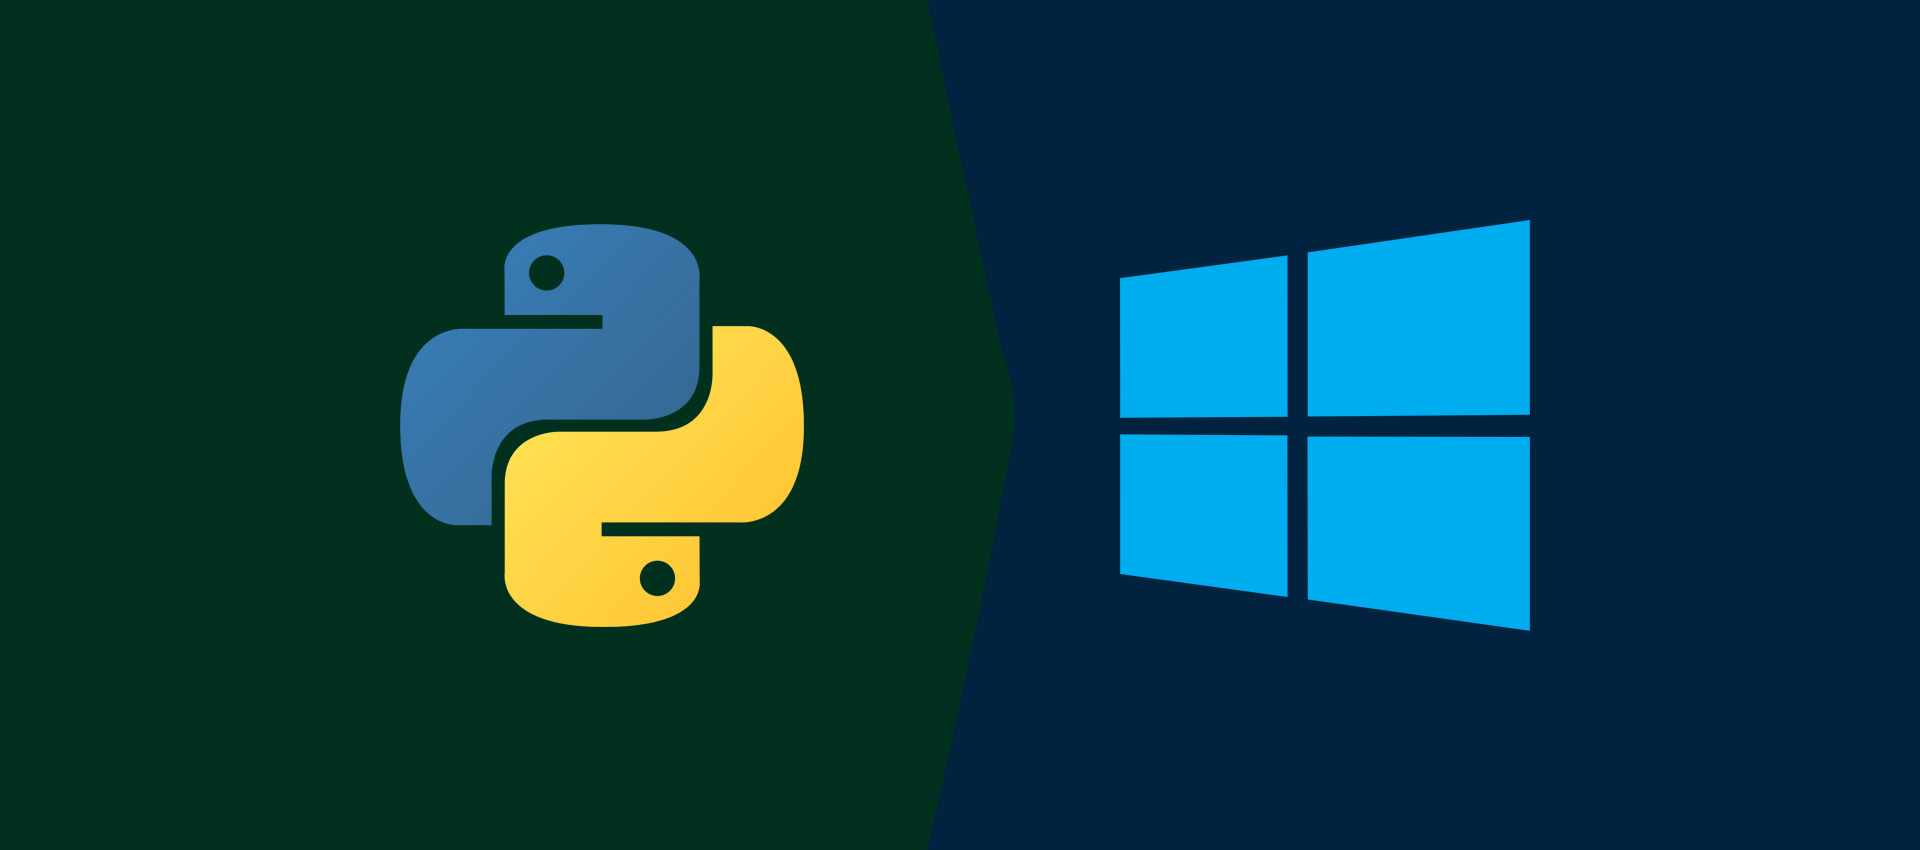 How To Install Python 3.9 On Windows